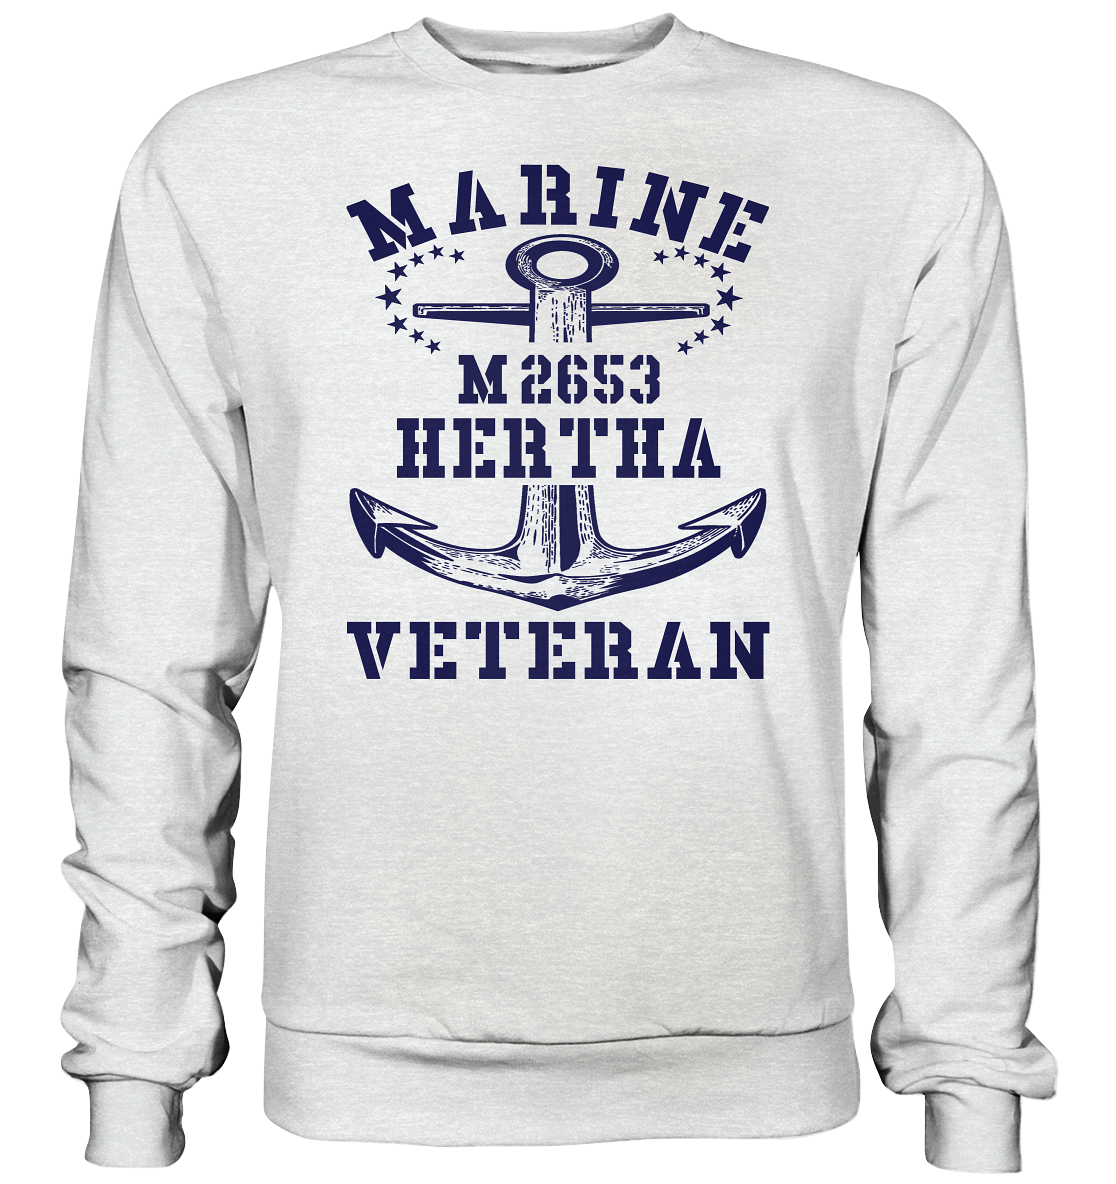 BiMi M2653 H.E.R.T.H.A. Marine Veteran - Premium Sweatshirt